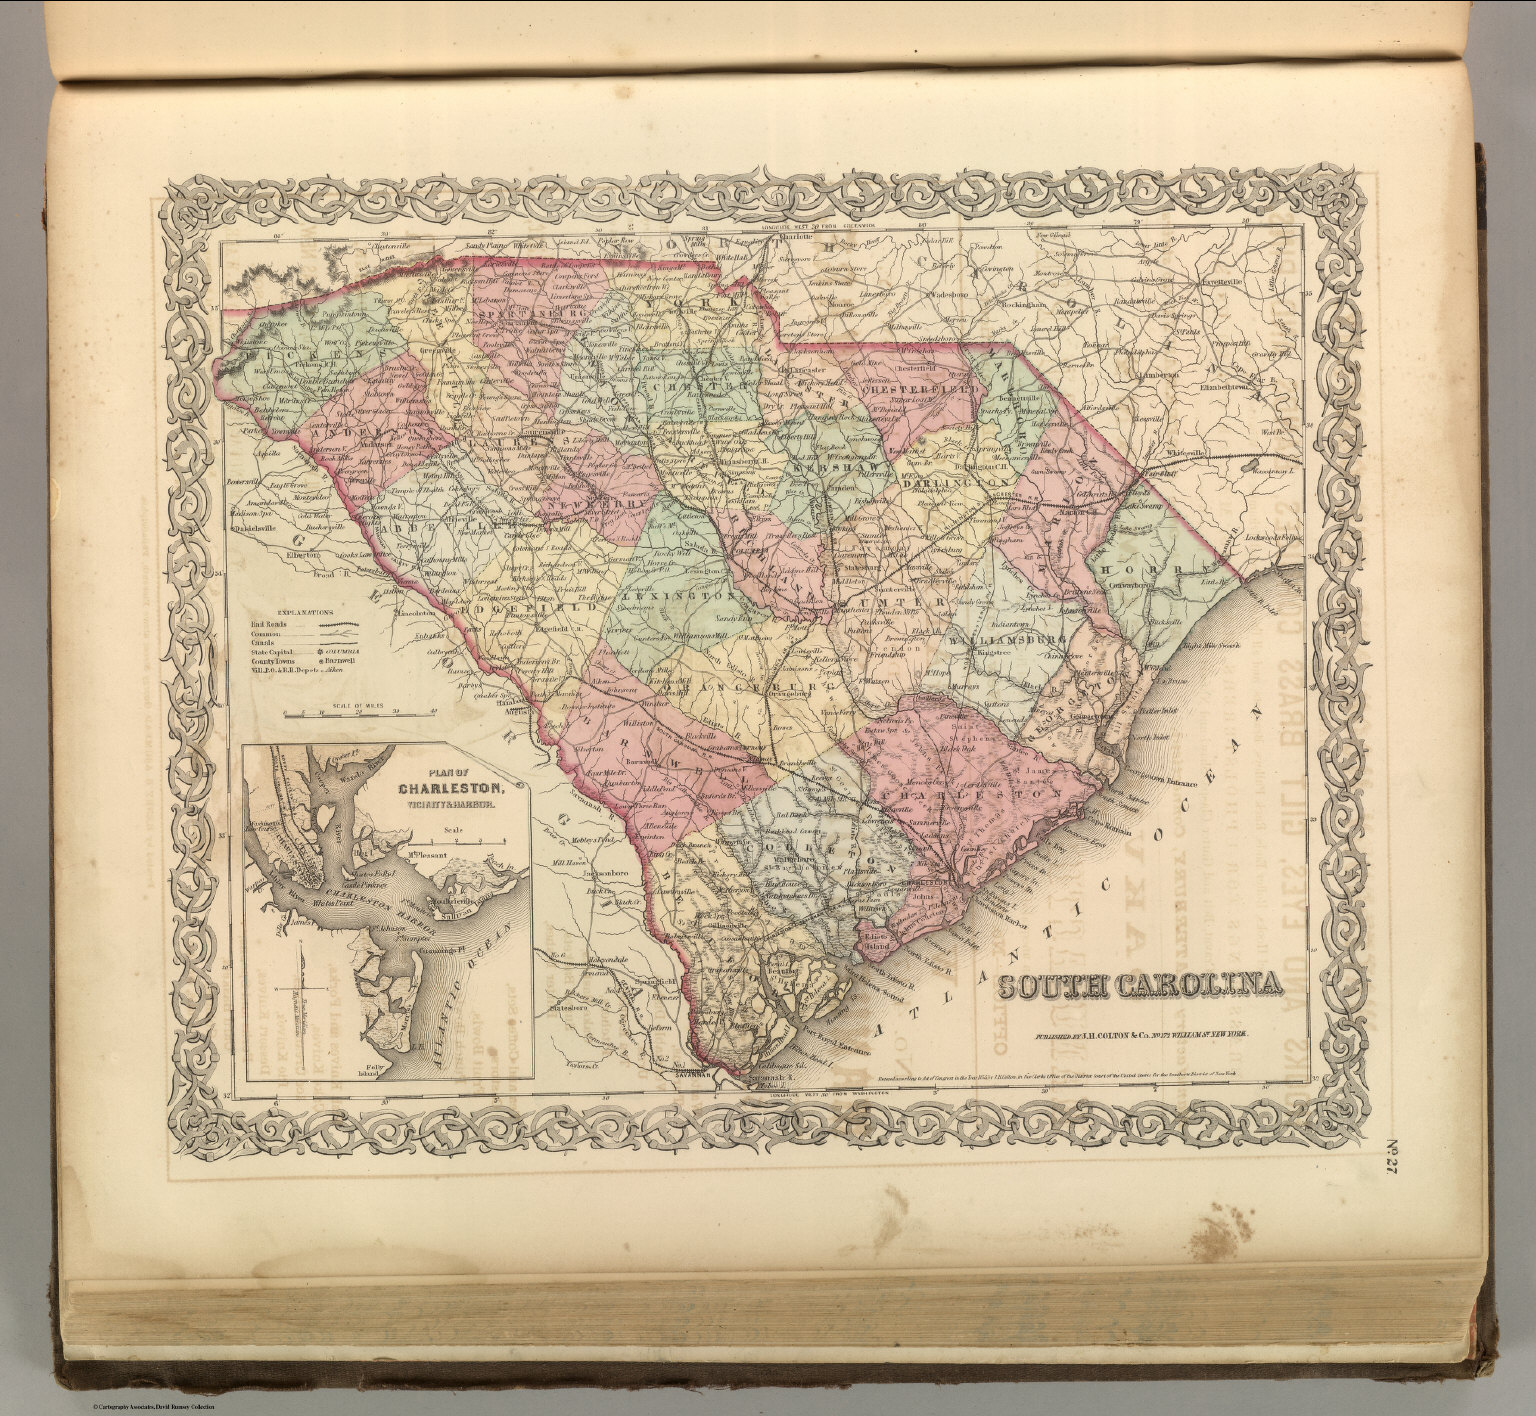 South Carolina David Rumsey Historical Map Collection 0114